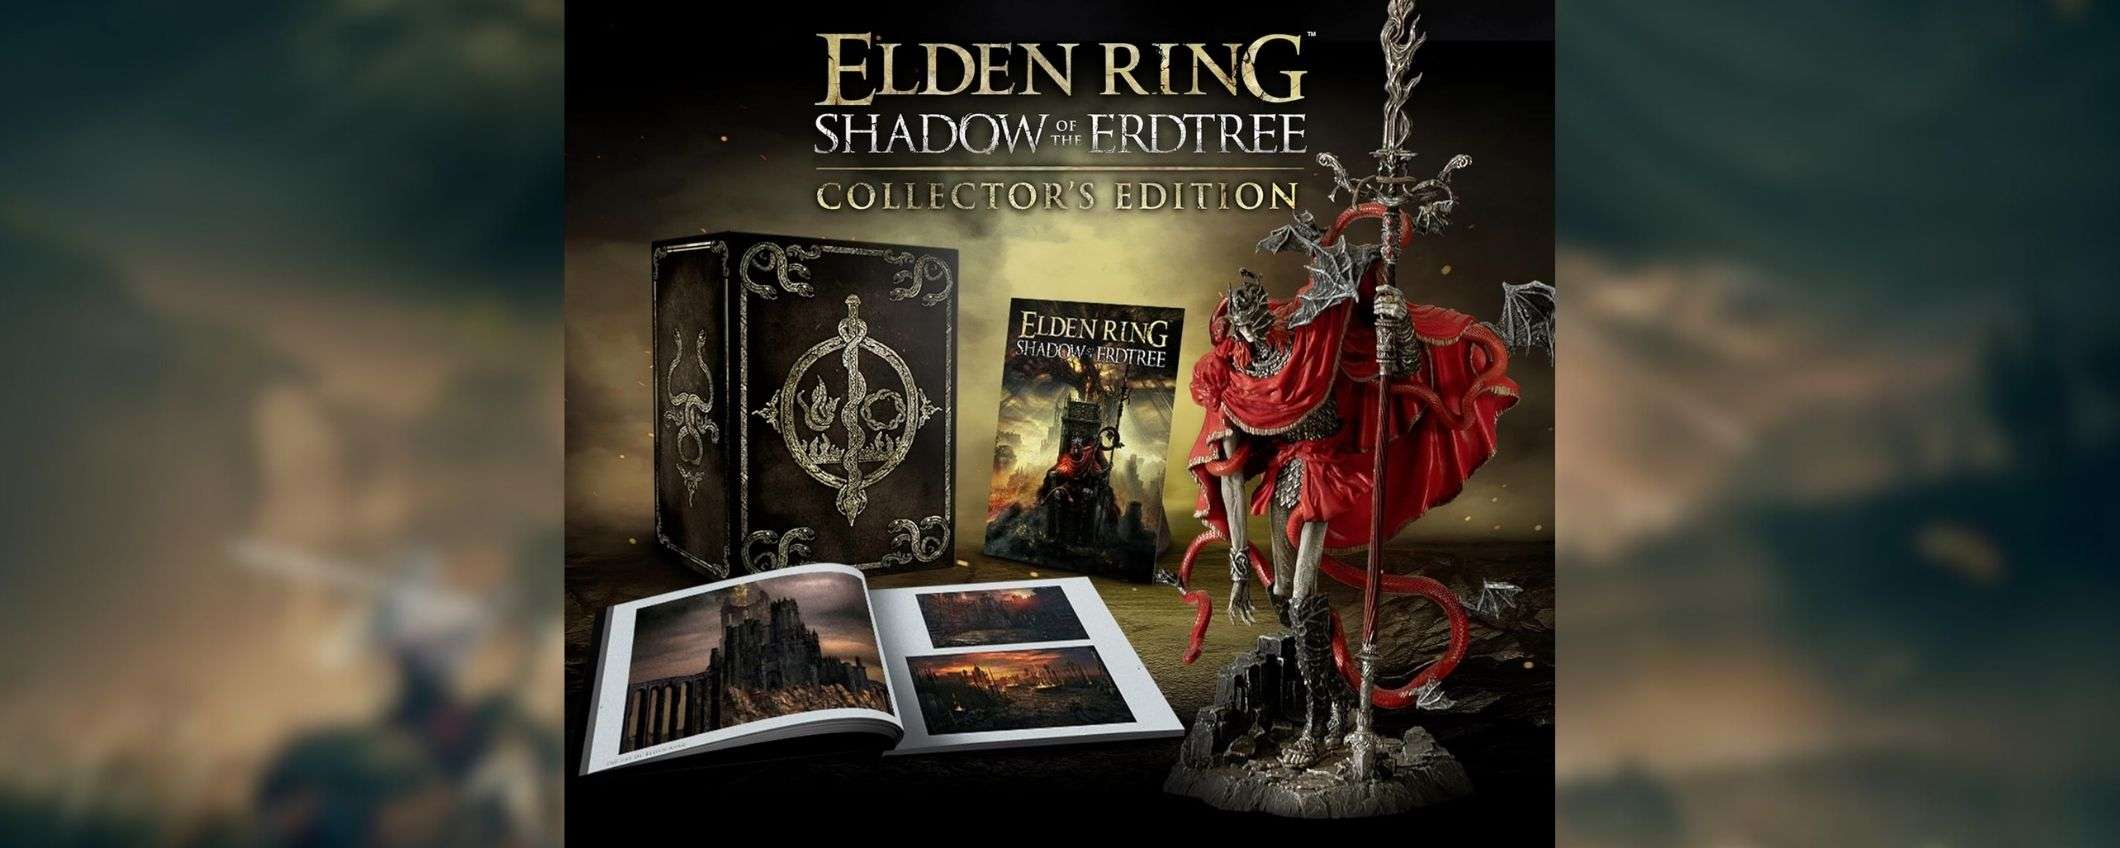 La Collector's Edition di Elden Ring: Shadow of the Erdtree è disponibile su Amazon!